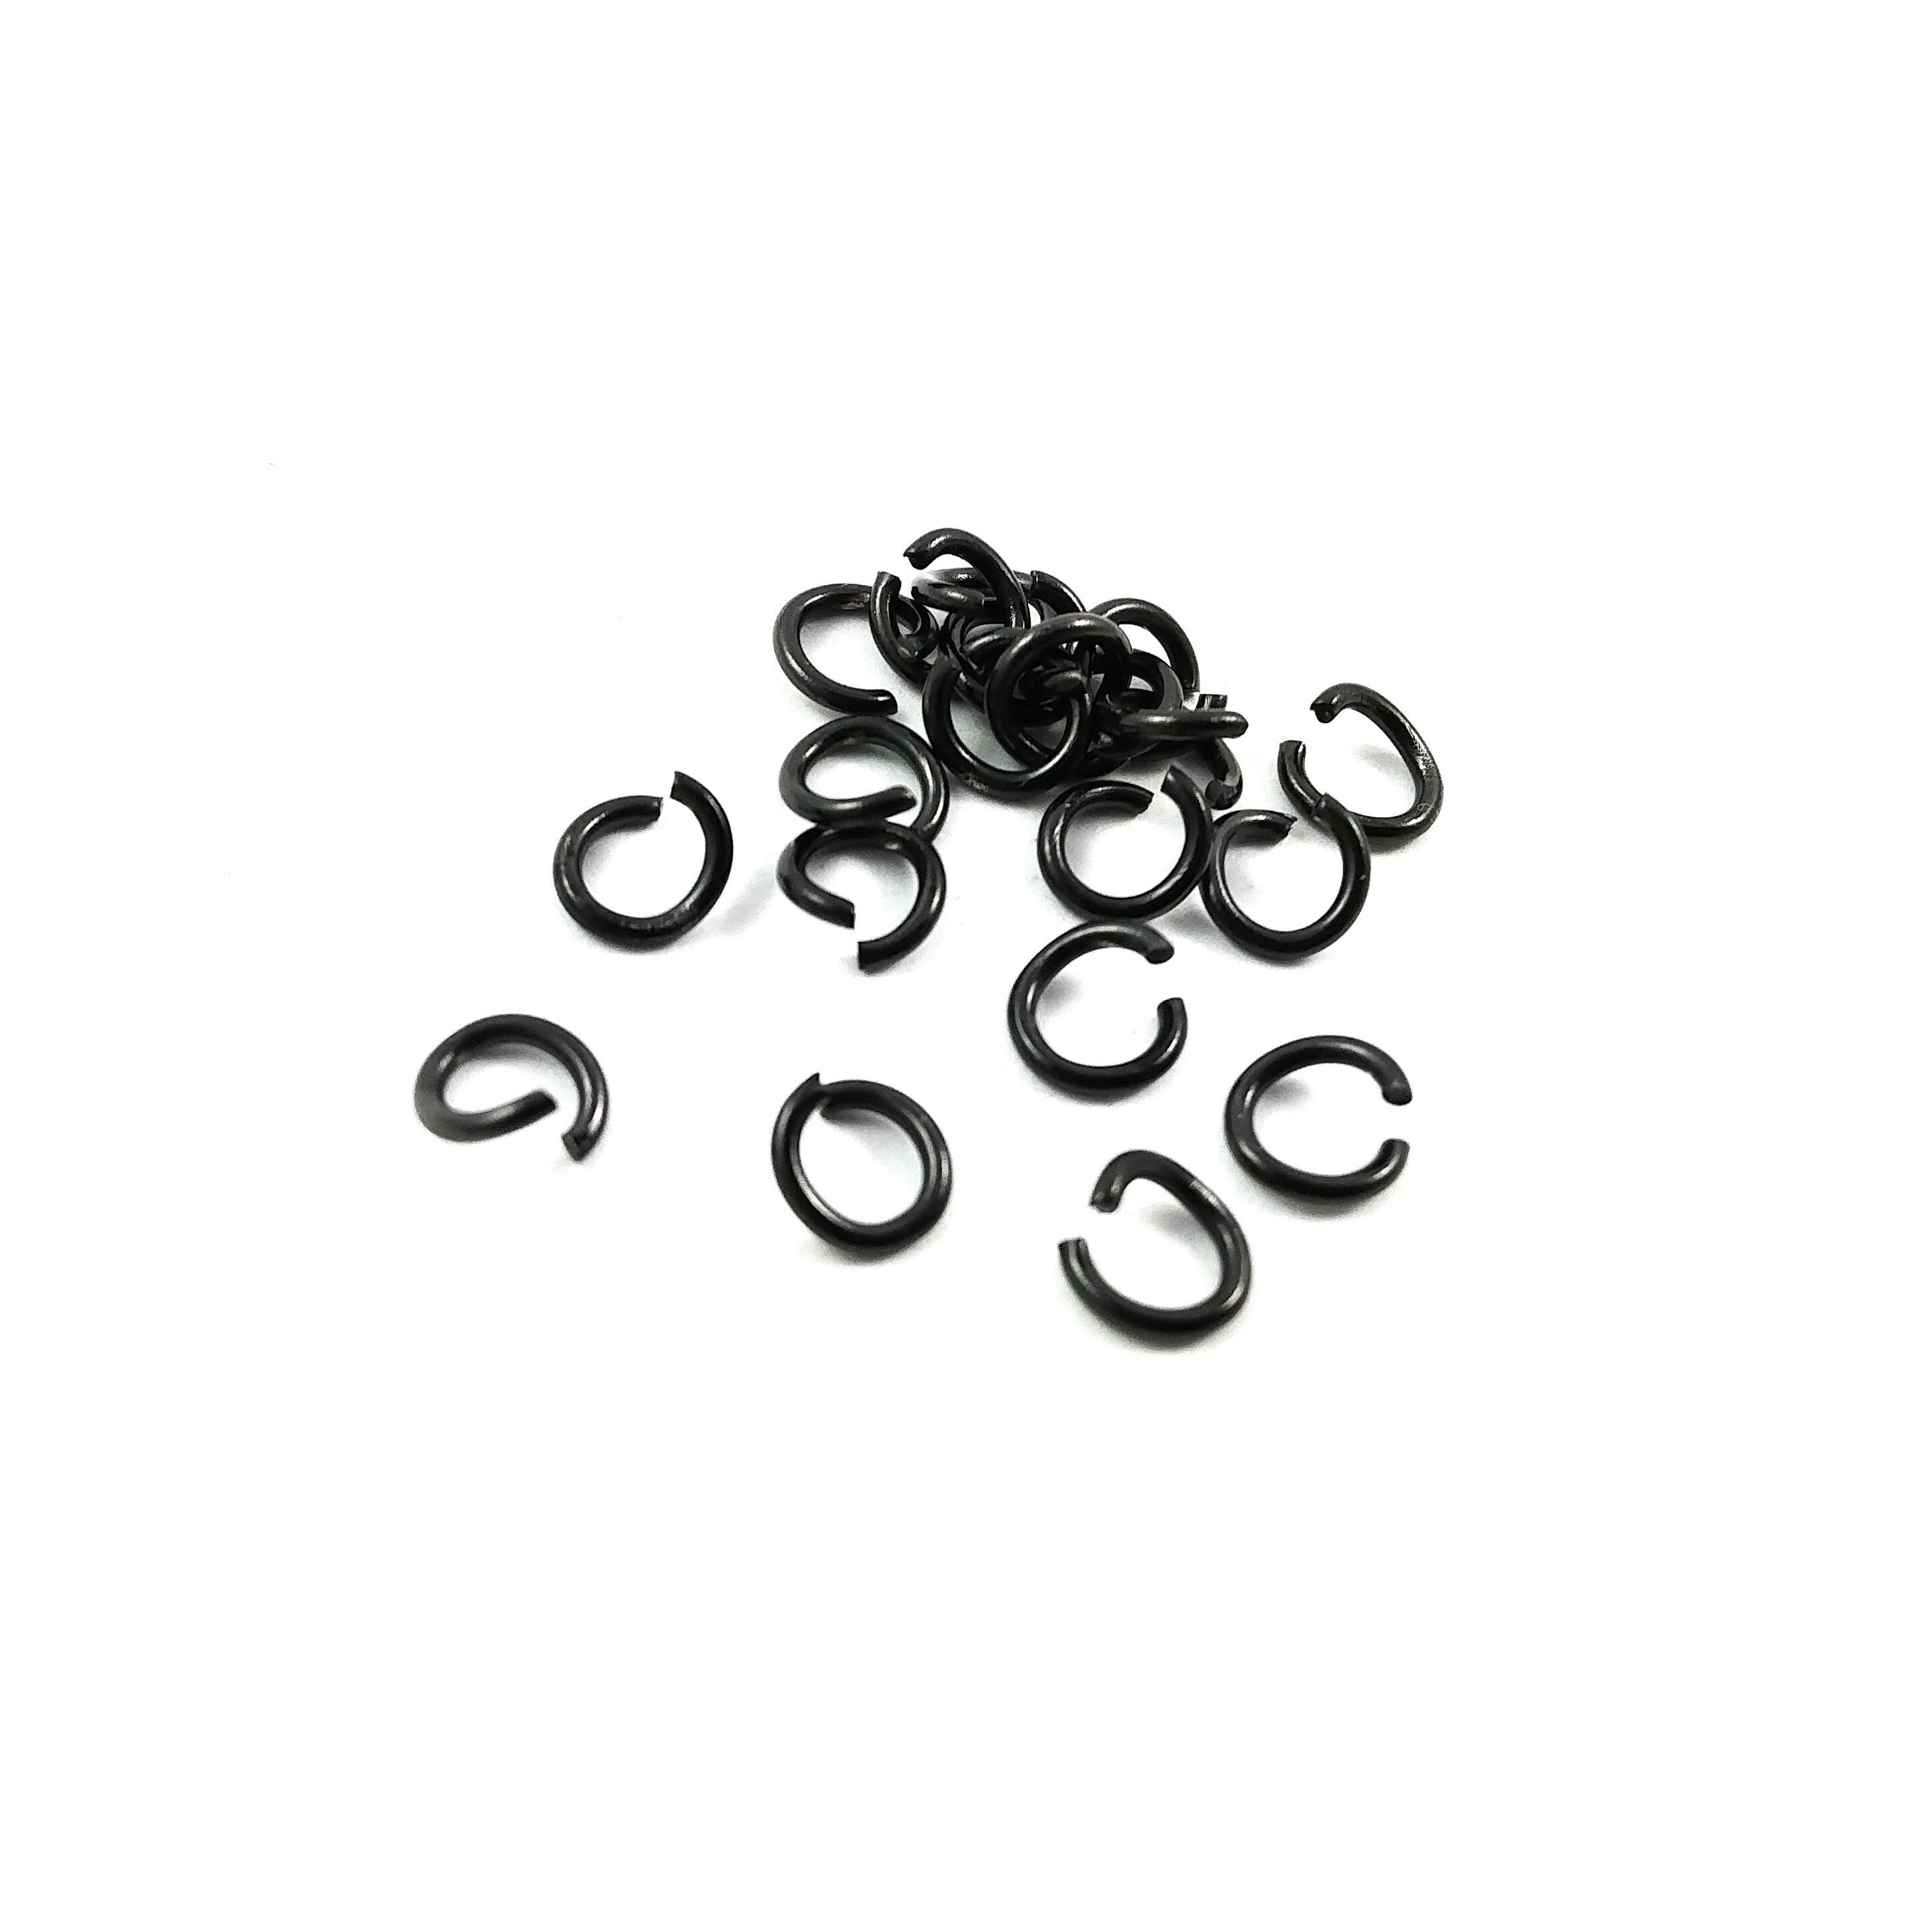 Black stainless steel jump rings 5, 6 or 8mm - Jewelry making findings